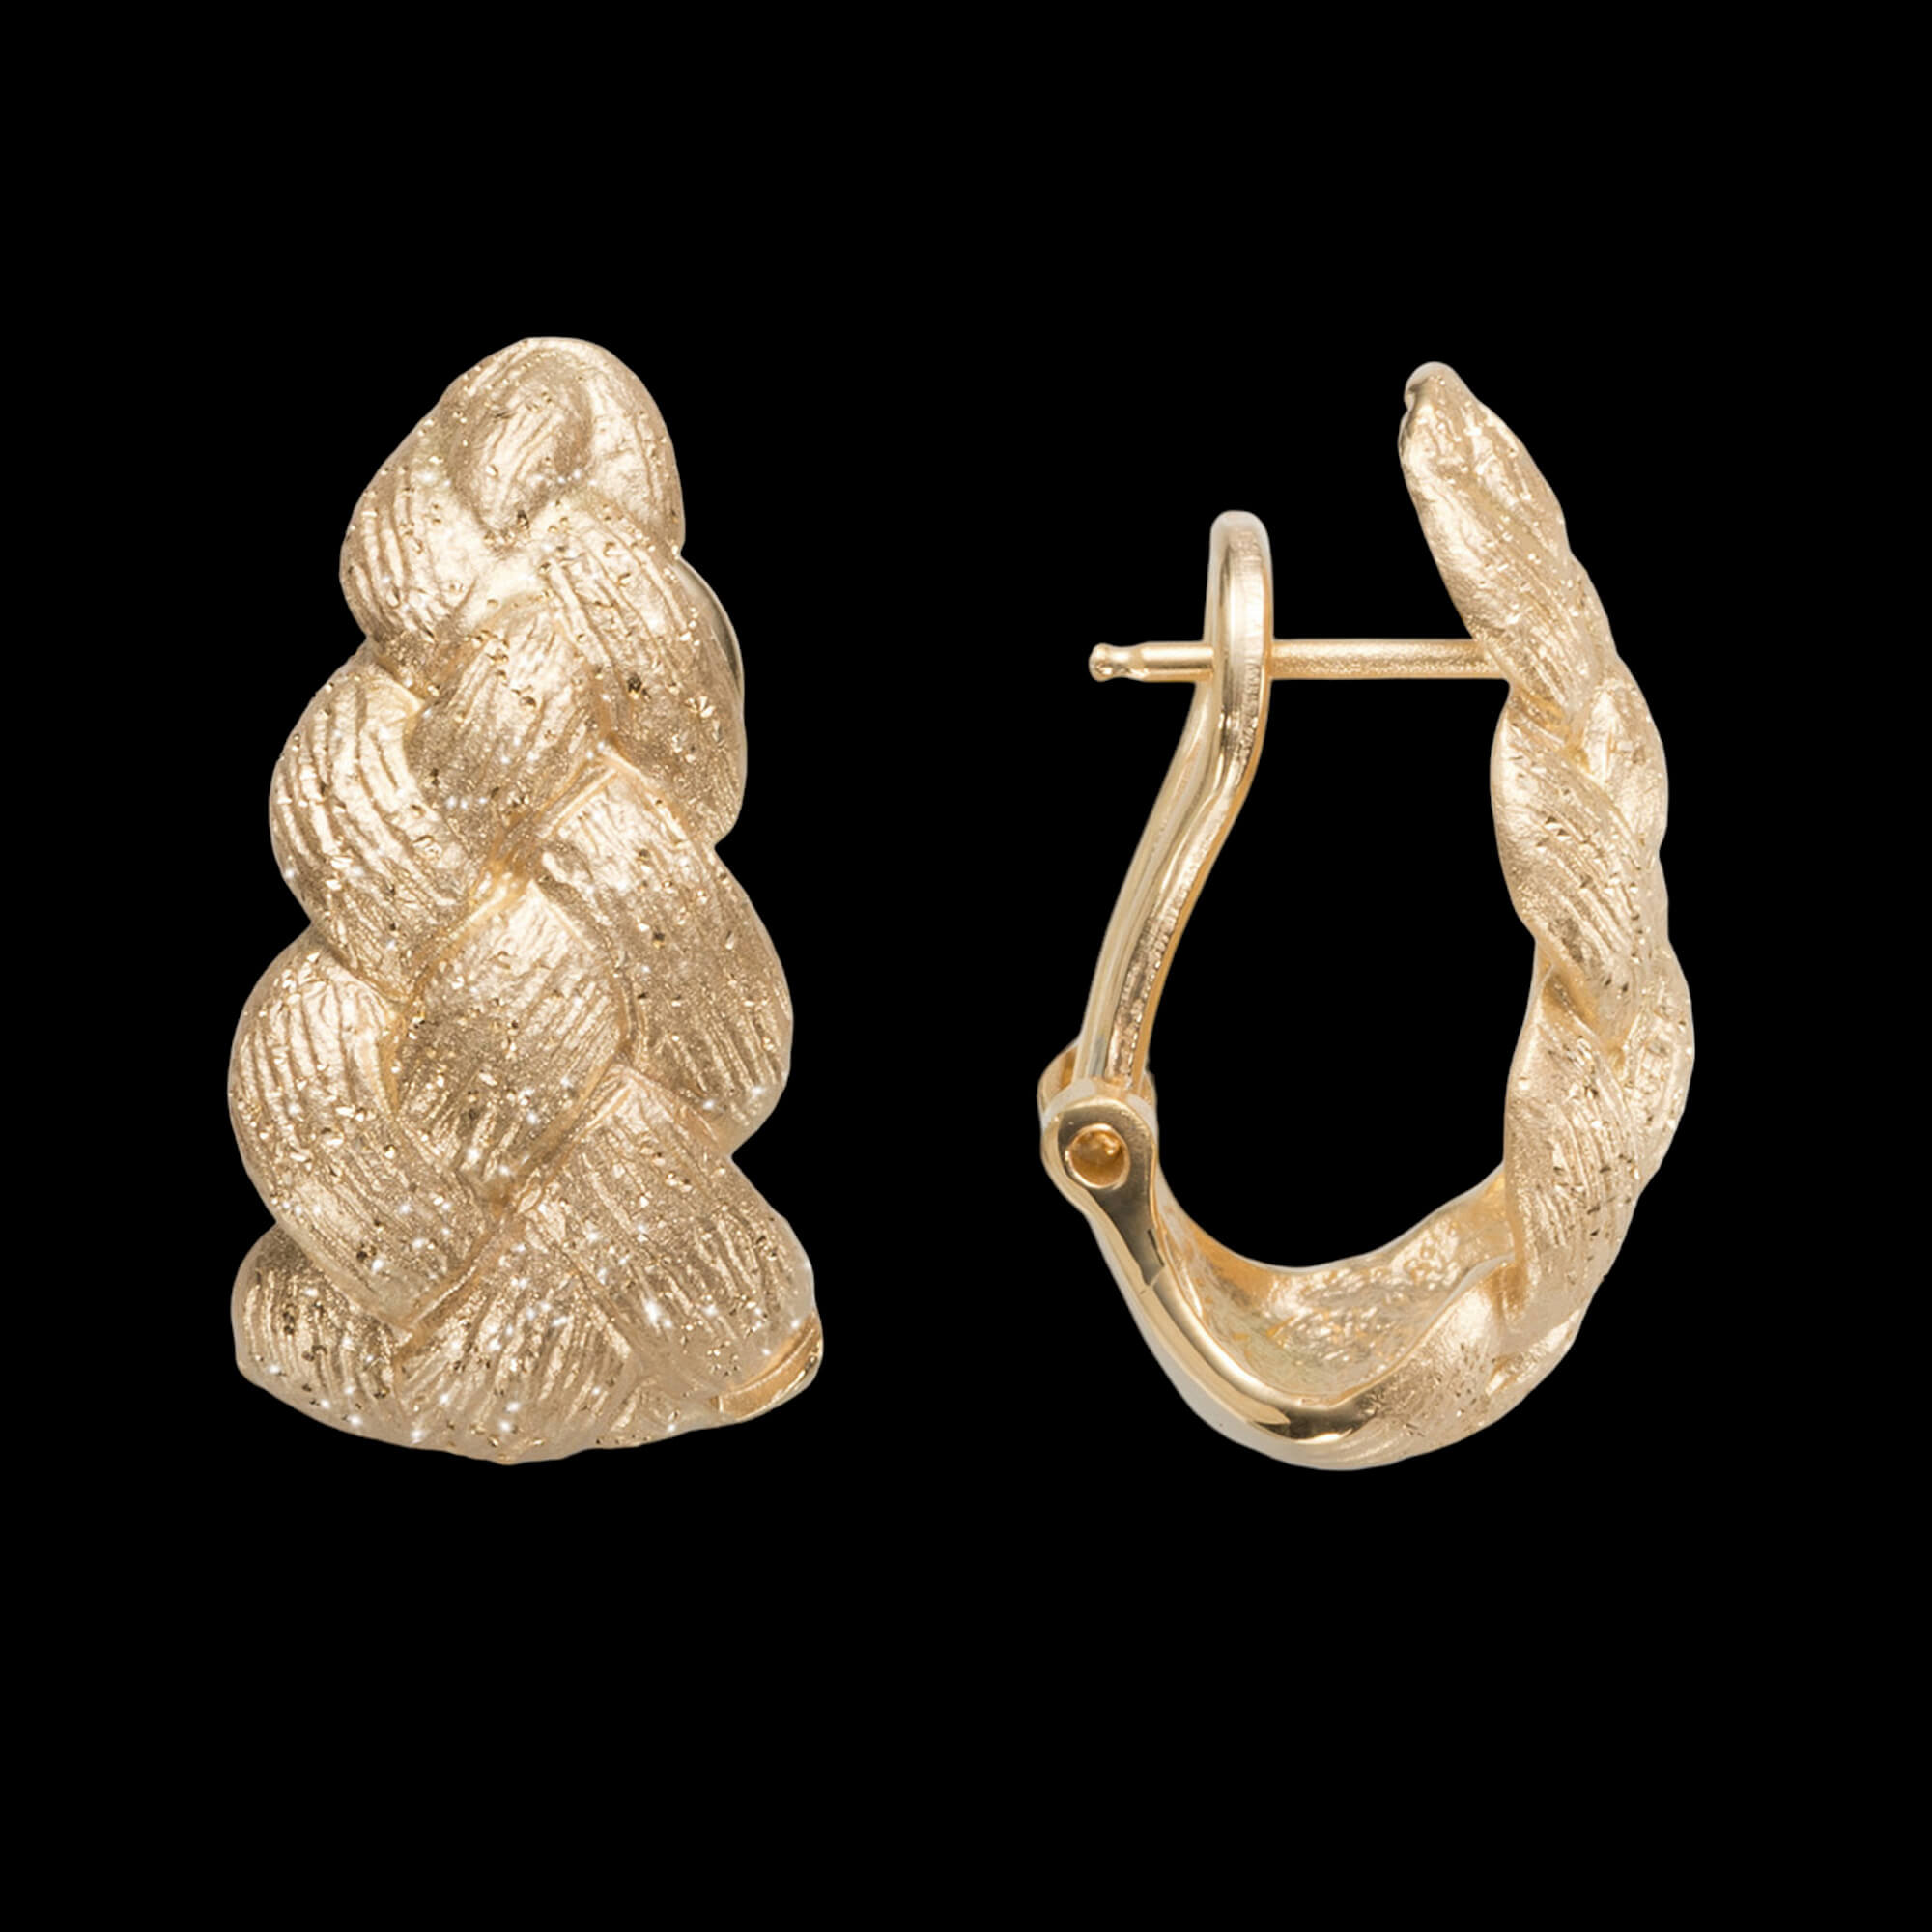 Beautiful gilt and braided earrings